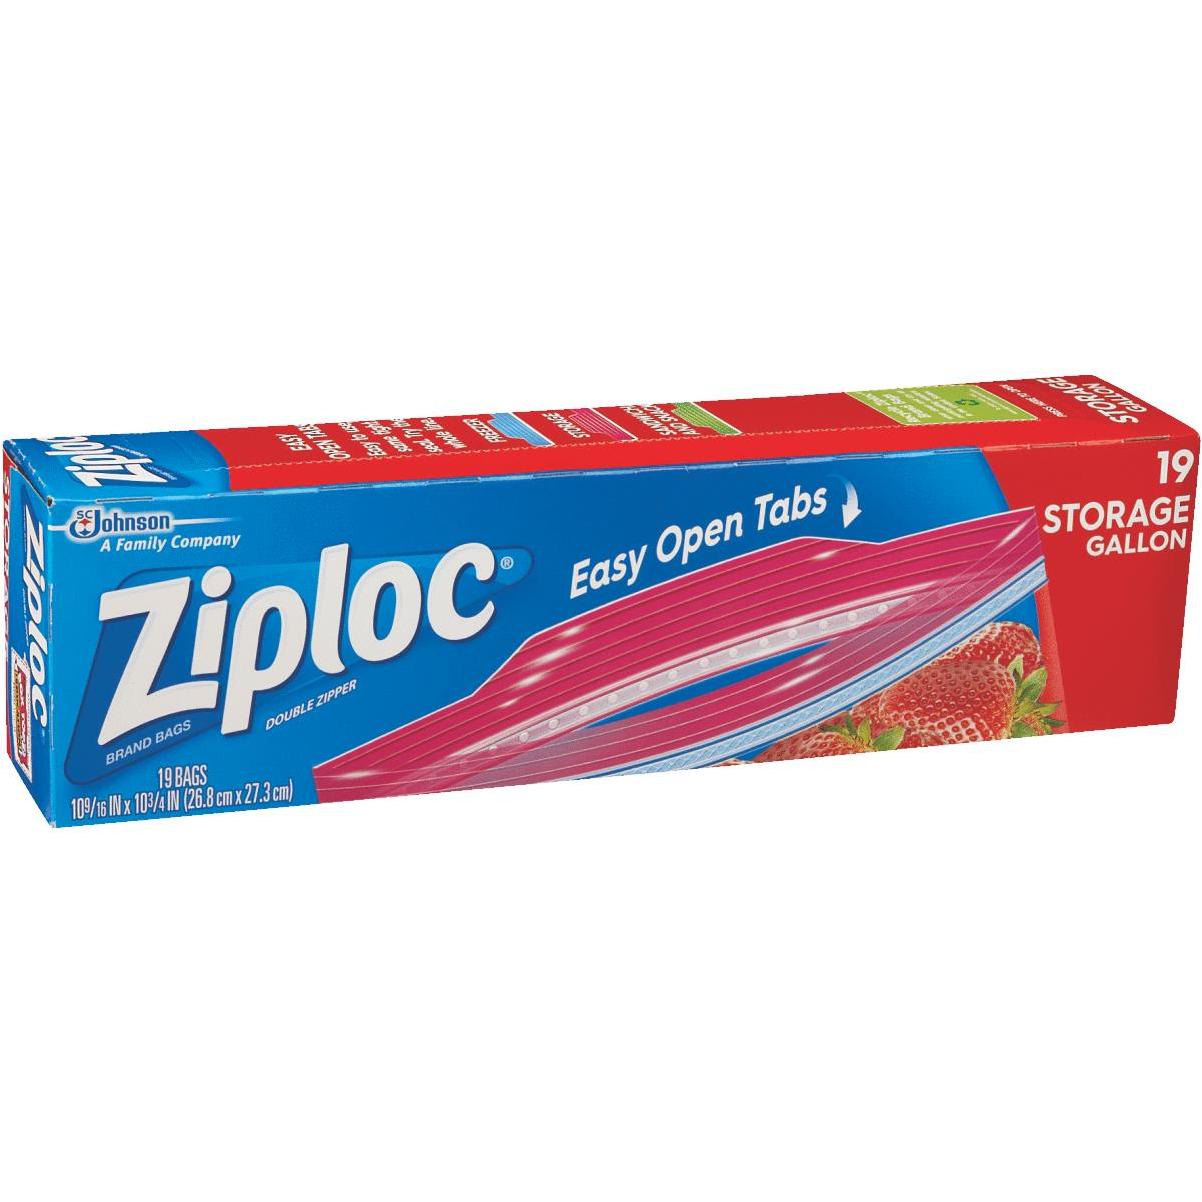 Ziploc Big Bag 3 Gallon Large Storage Bags, (5-Count) 71592 - Two boxes